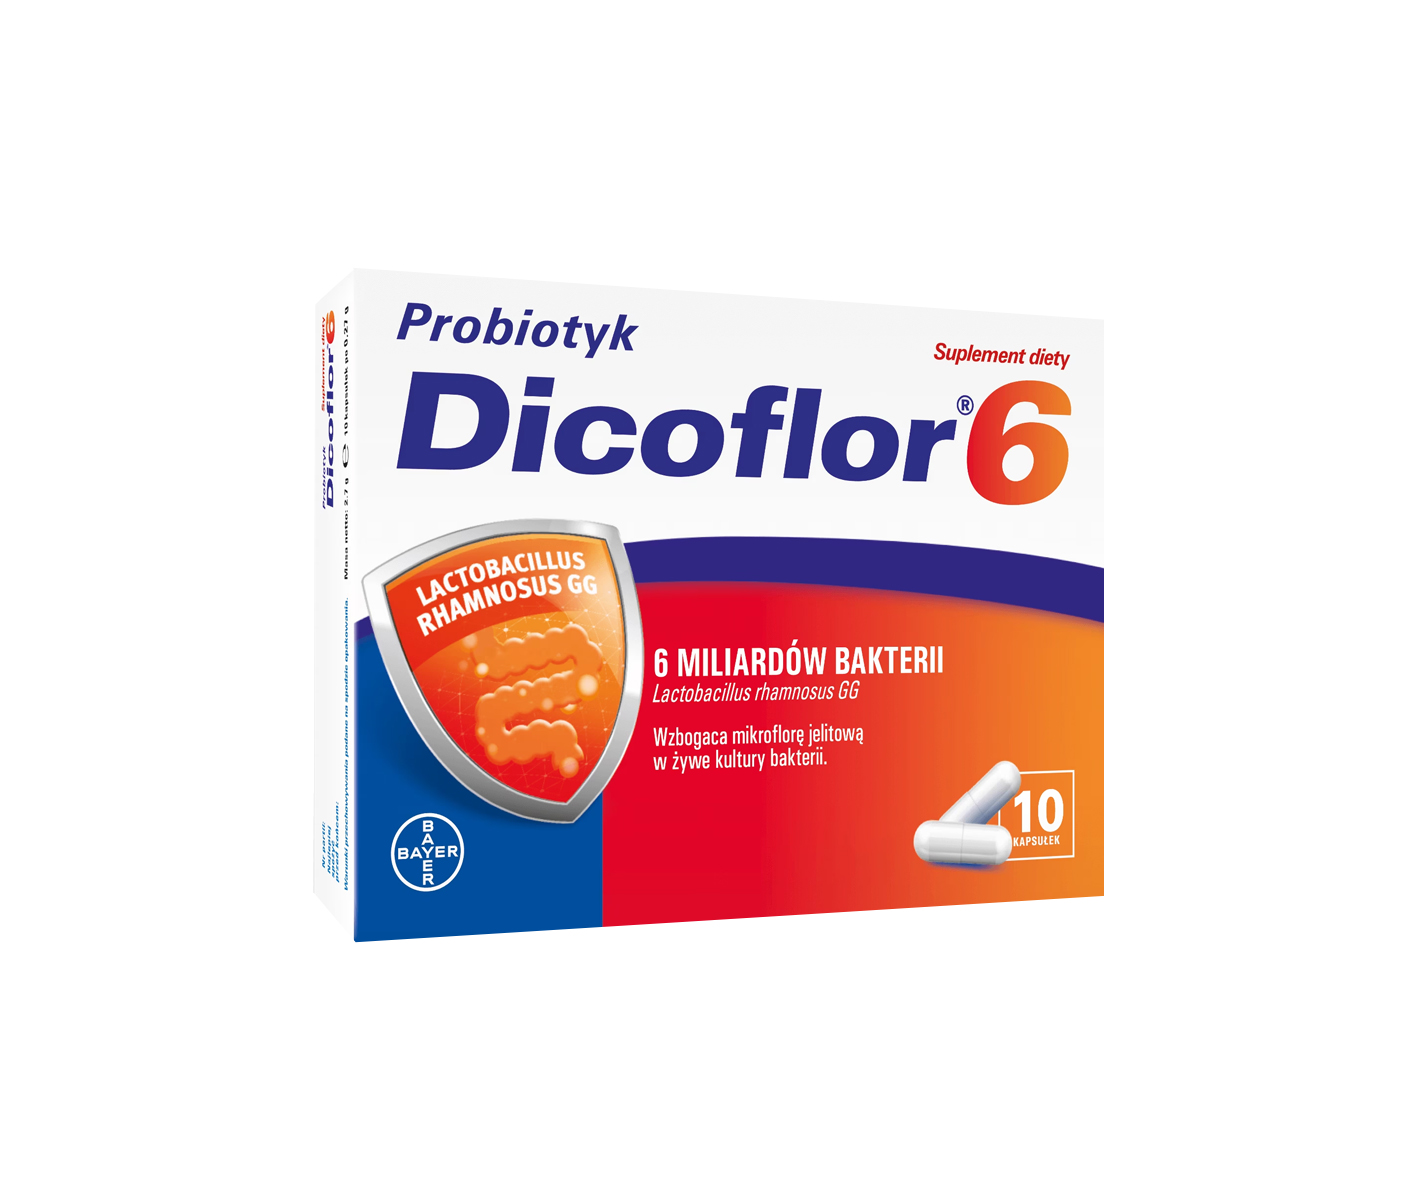 Dicoflor 6, suplement diety, probiotyk